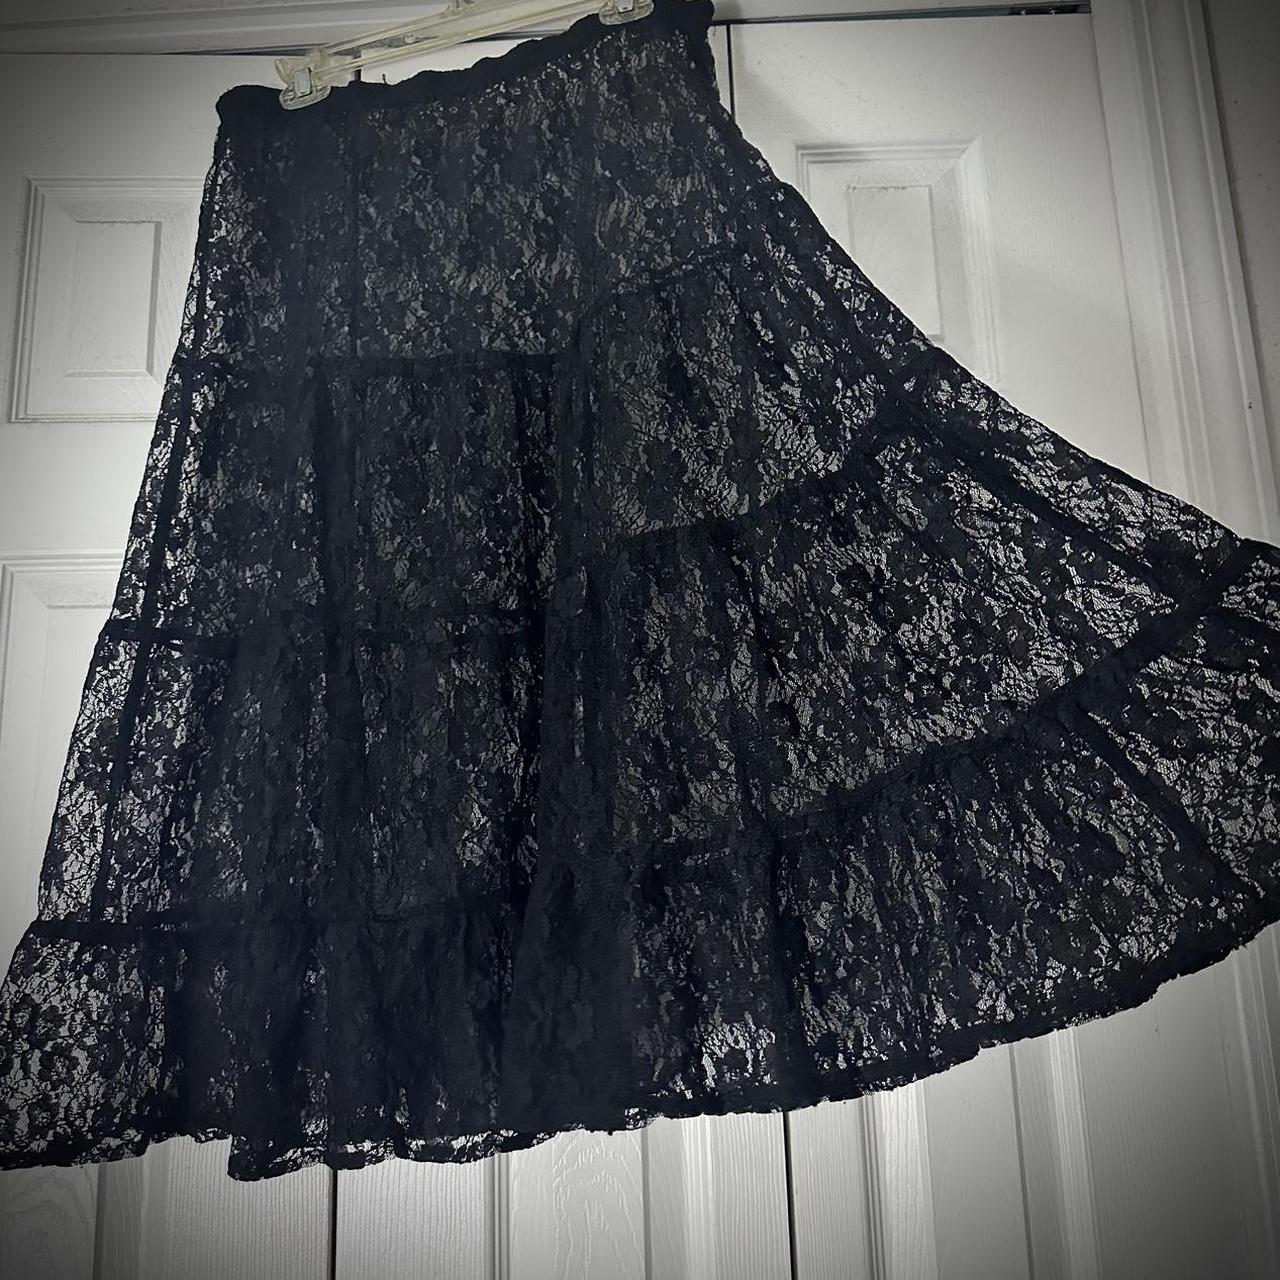 90s black lace overlay skirt ｡.:*･゜ﾟ･* gorgeous... - Depop